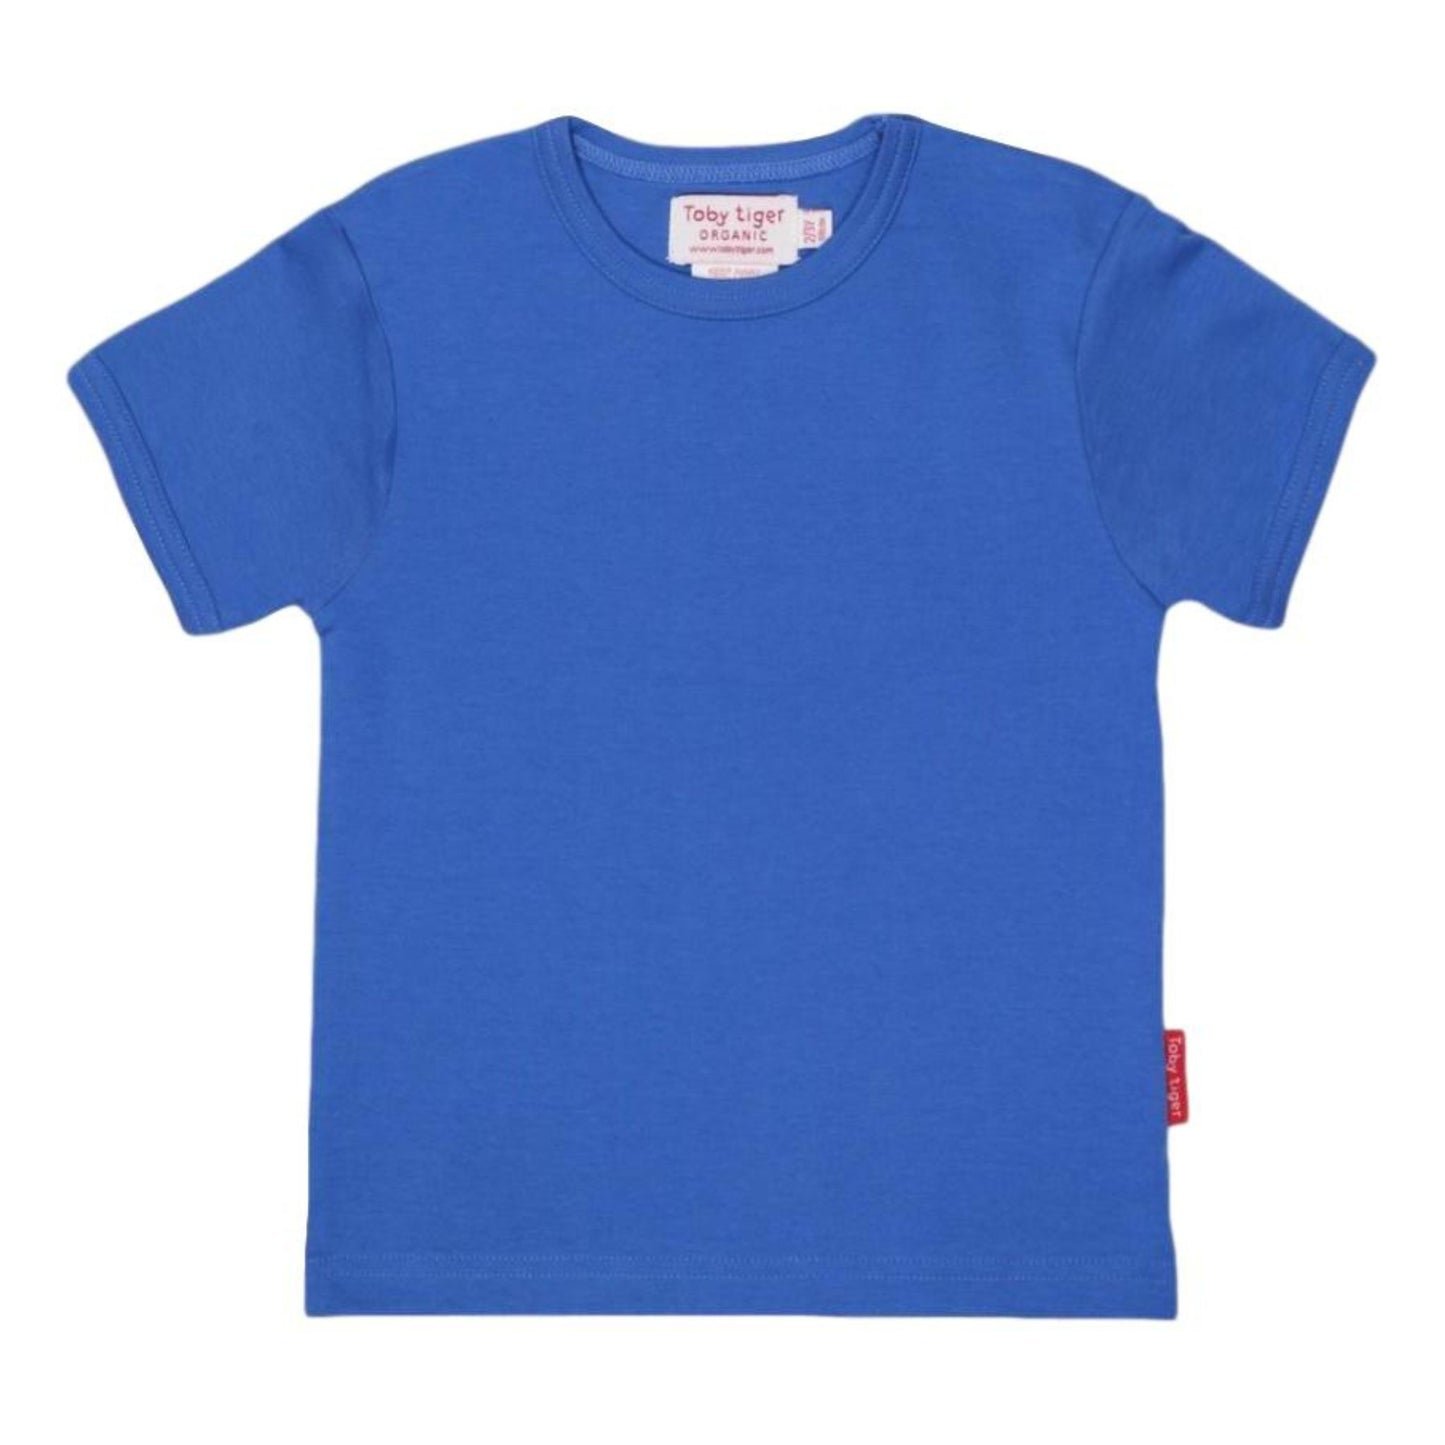 Toby Tiger t-shirt - blue